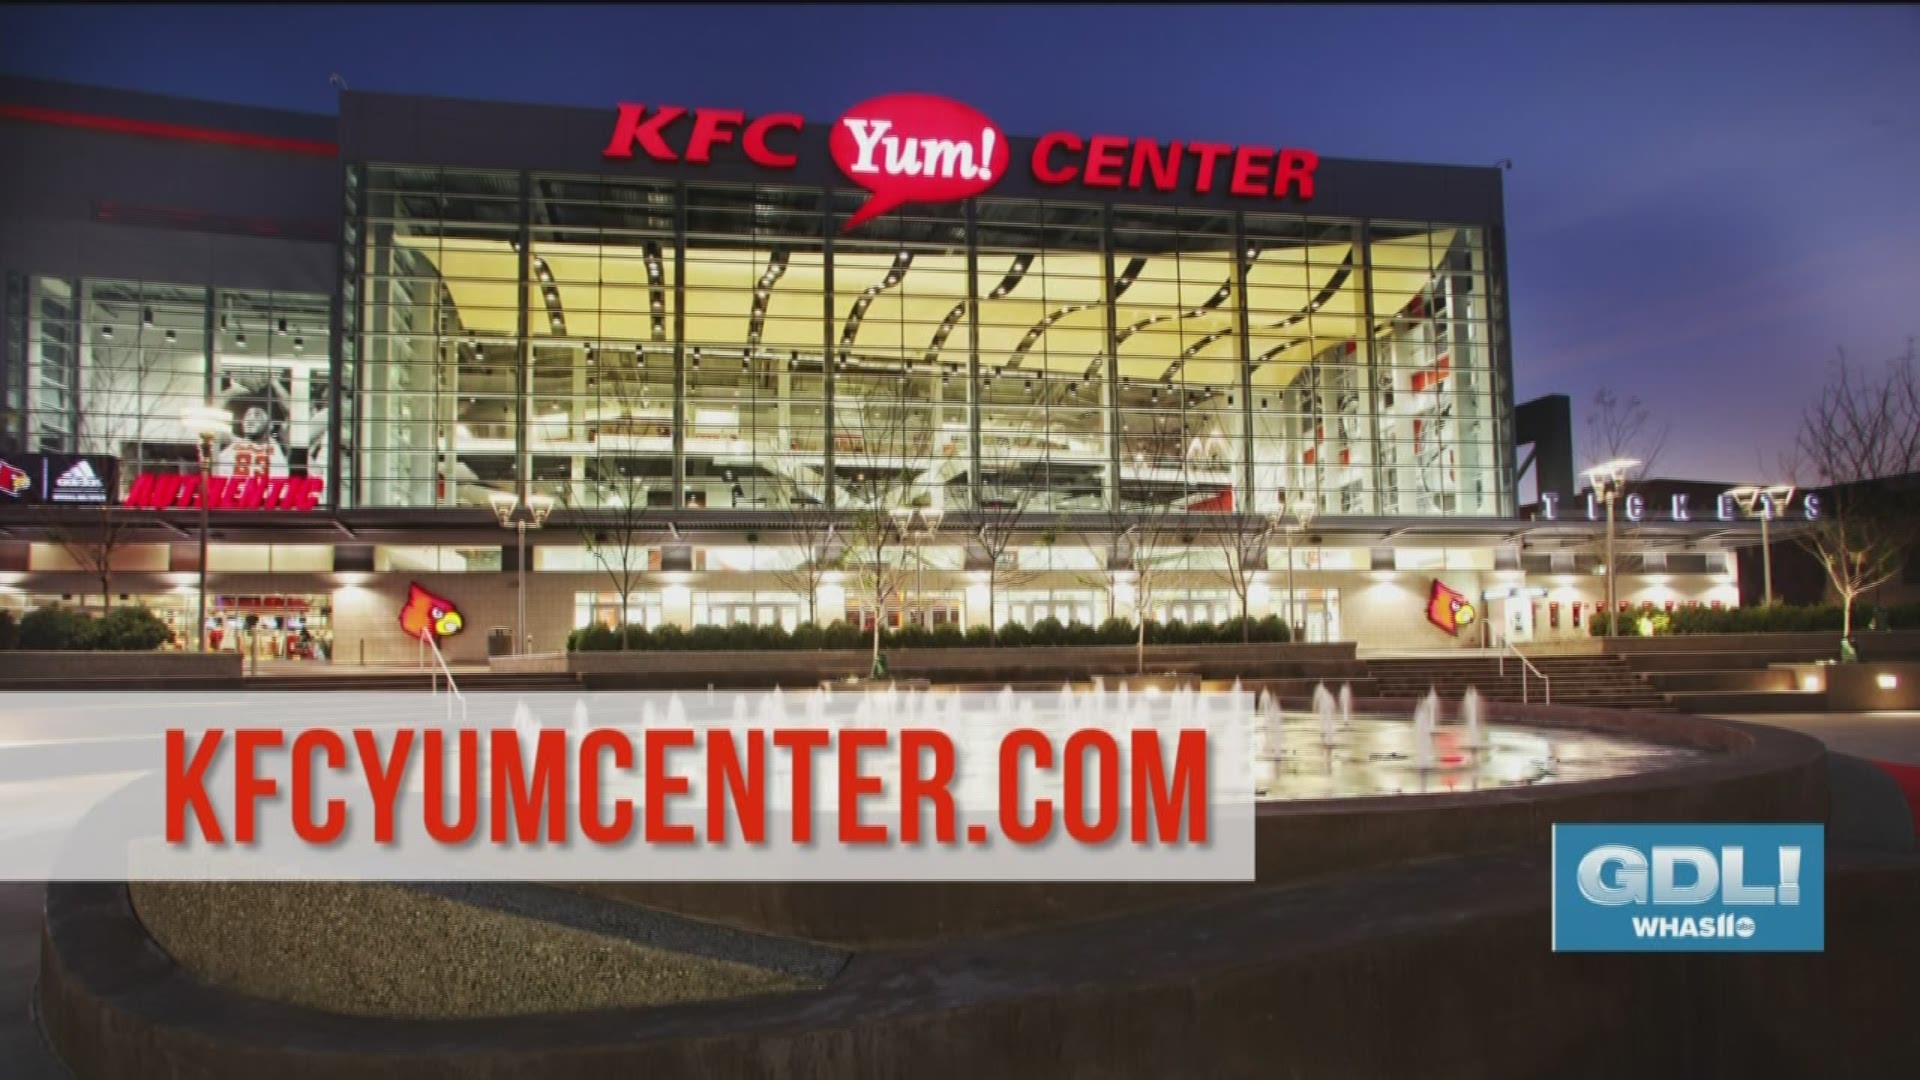 To check out all the upcoming events at the KFC Yum Center, go to KFCYumCenter.com.